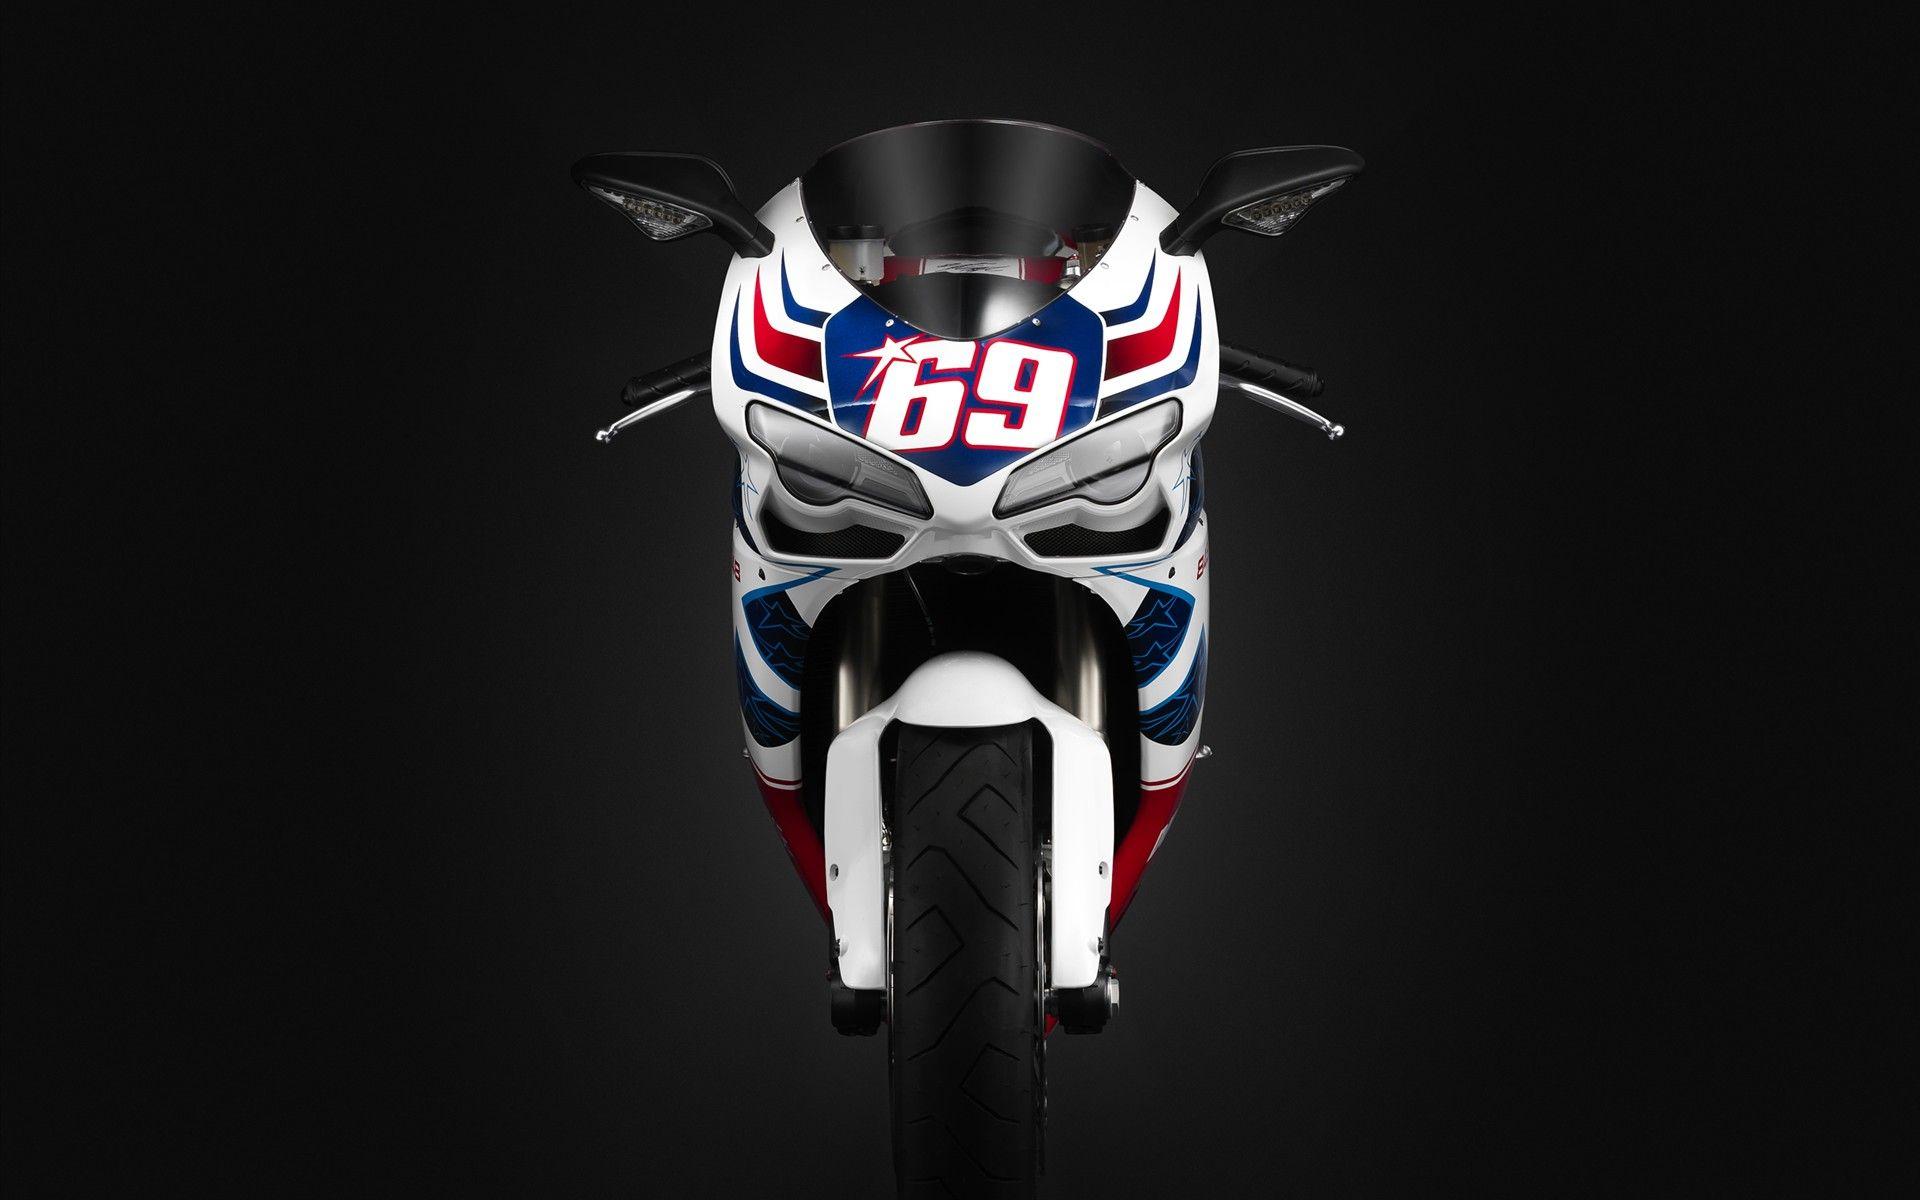 Ducati Nicky Hayden Edition Widescreen 04. Free Desktop